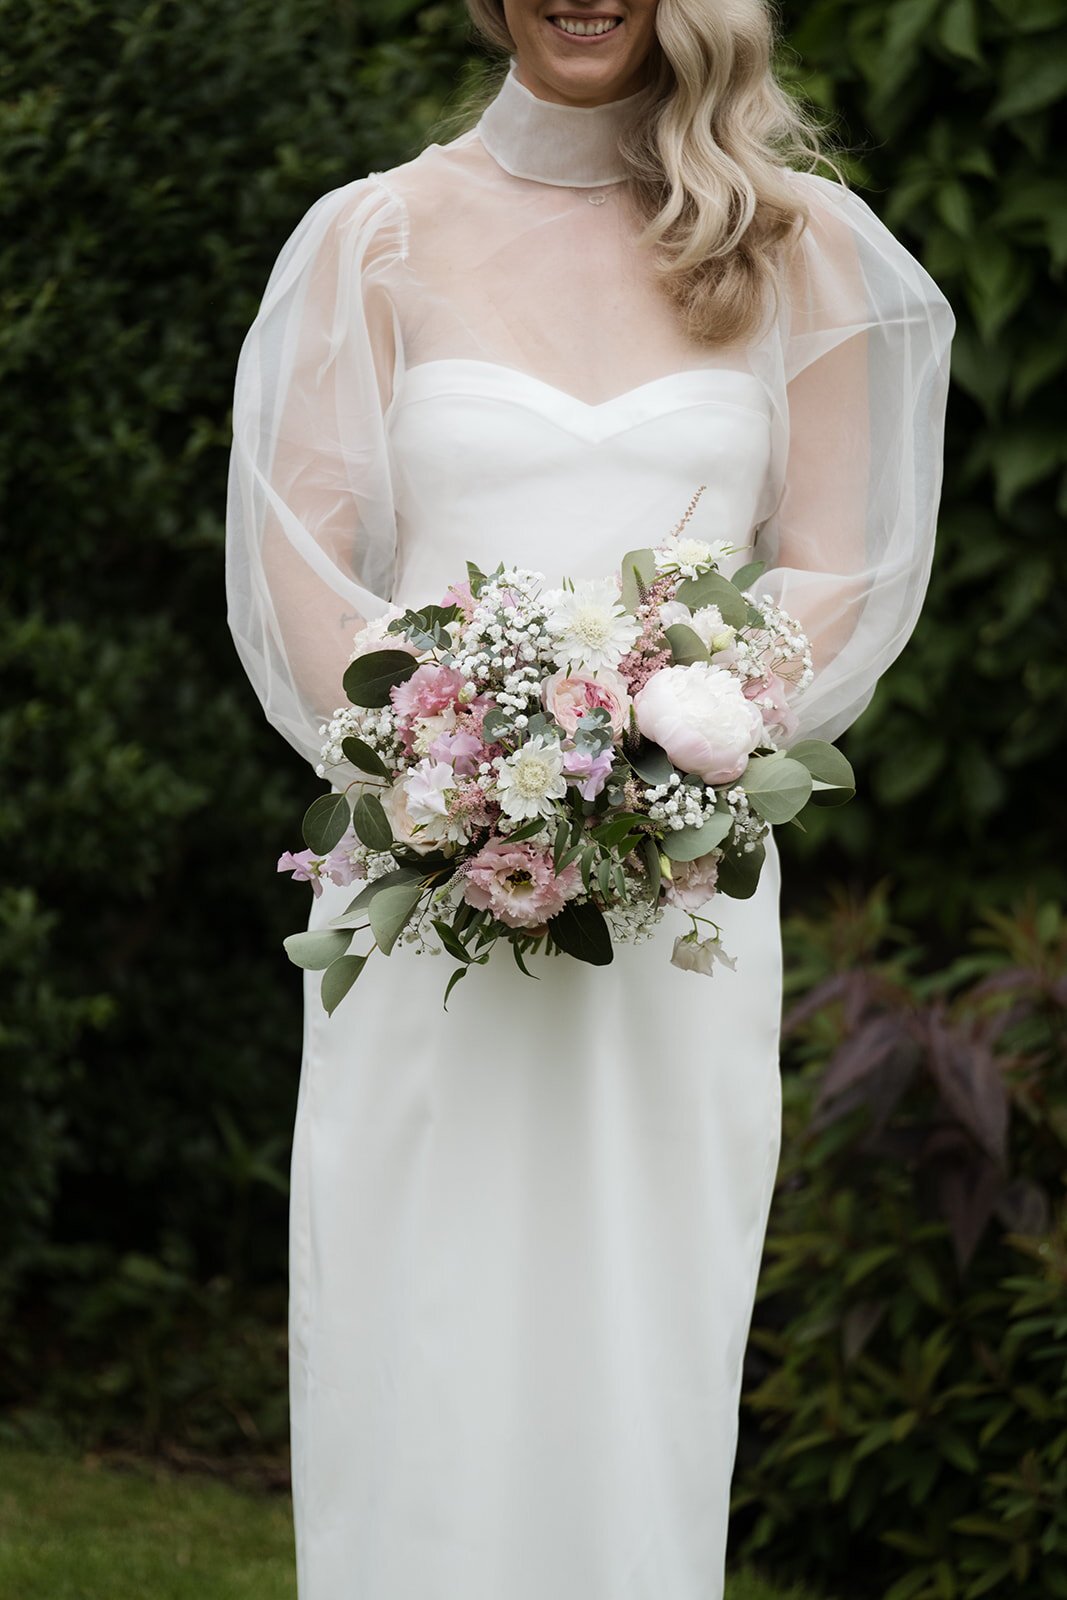 Beautiful bride Emma wore a wedding dress and silk organza top by Halfpenny London